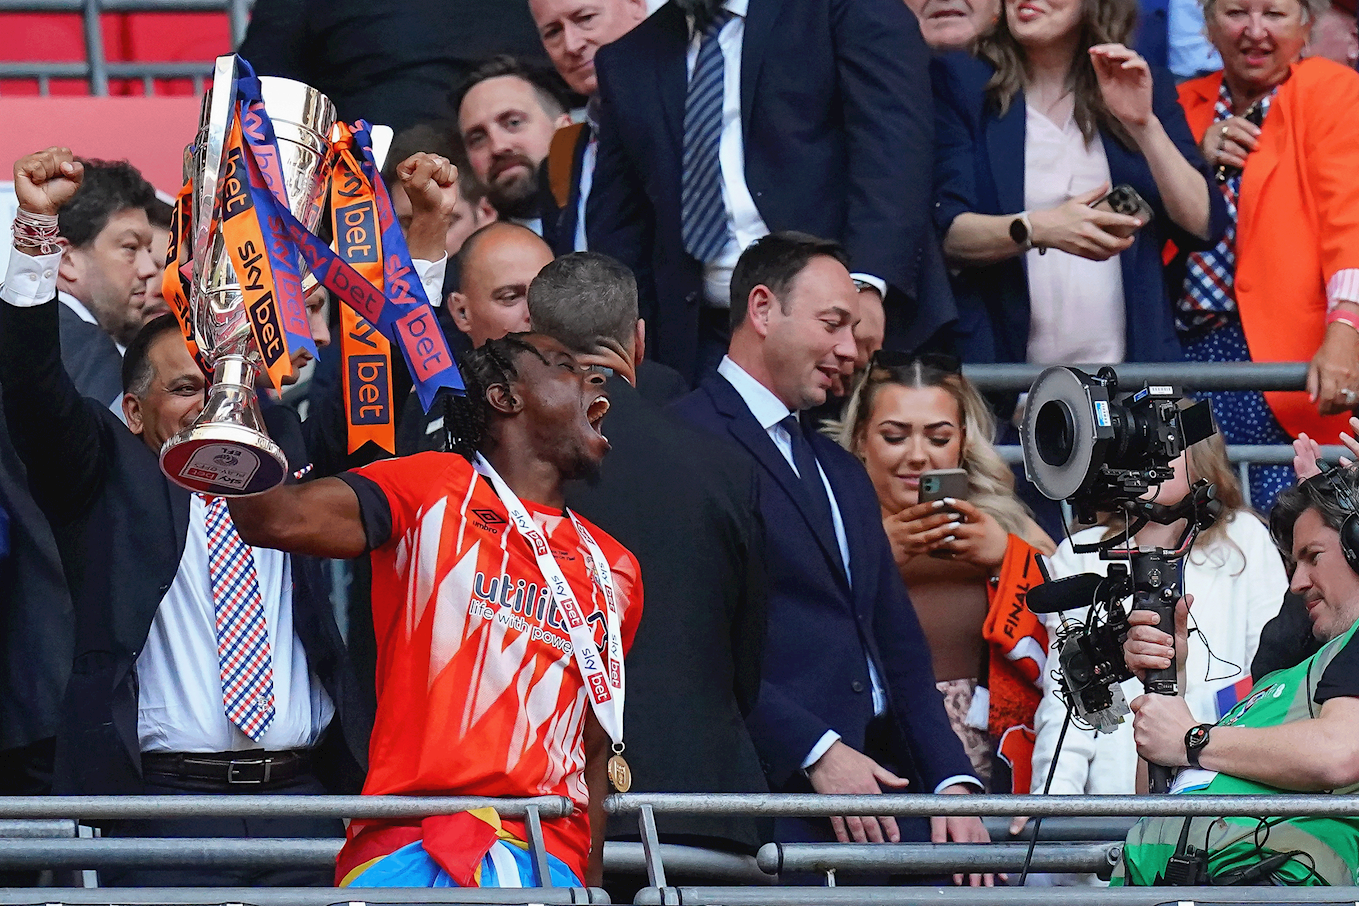 Pelly Ruddock Mpanzu lifting the Championship play-off trophy at Wembley Stadium.